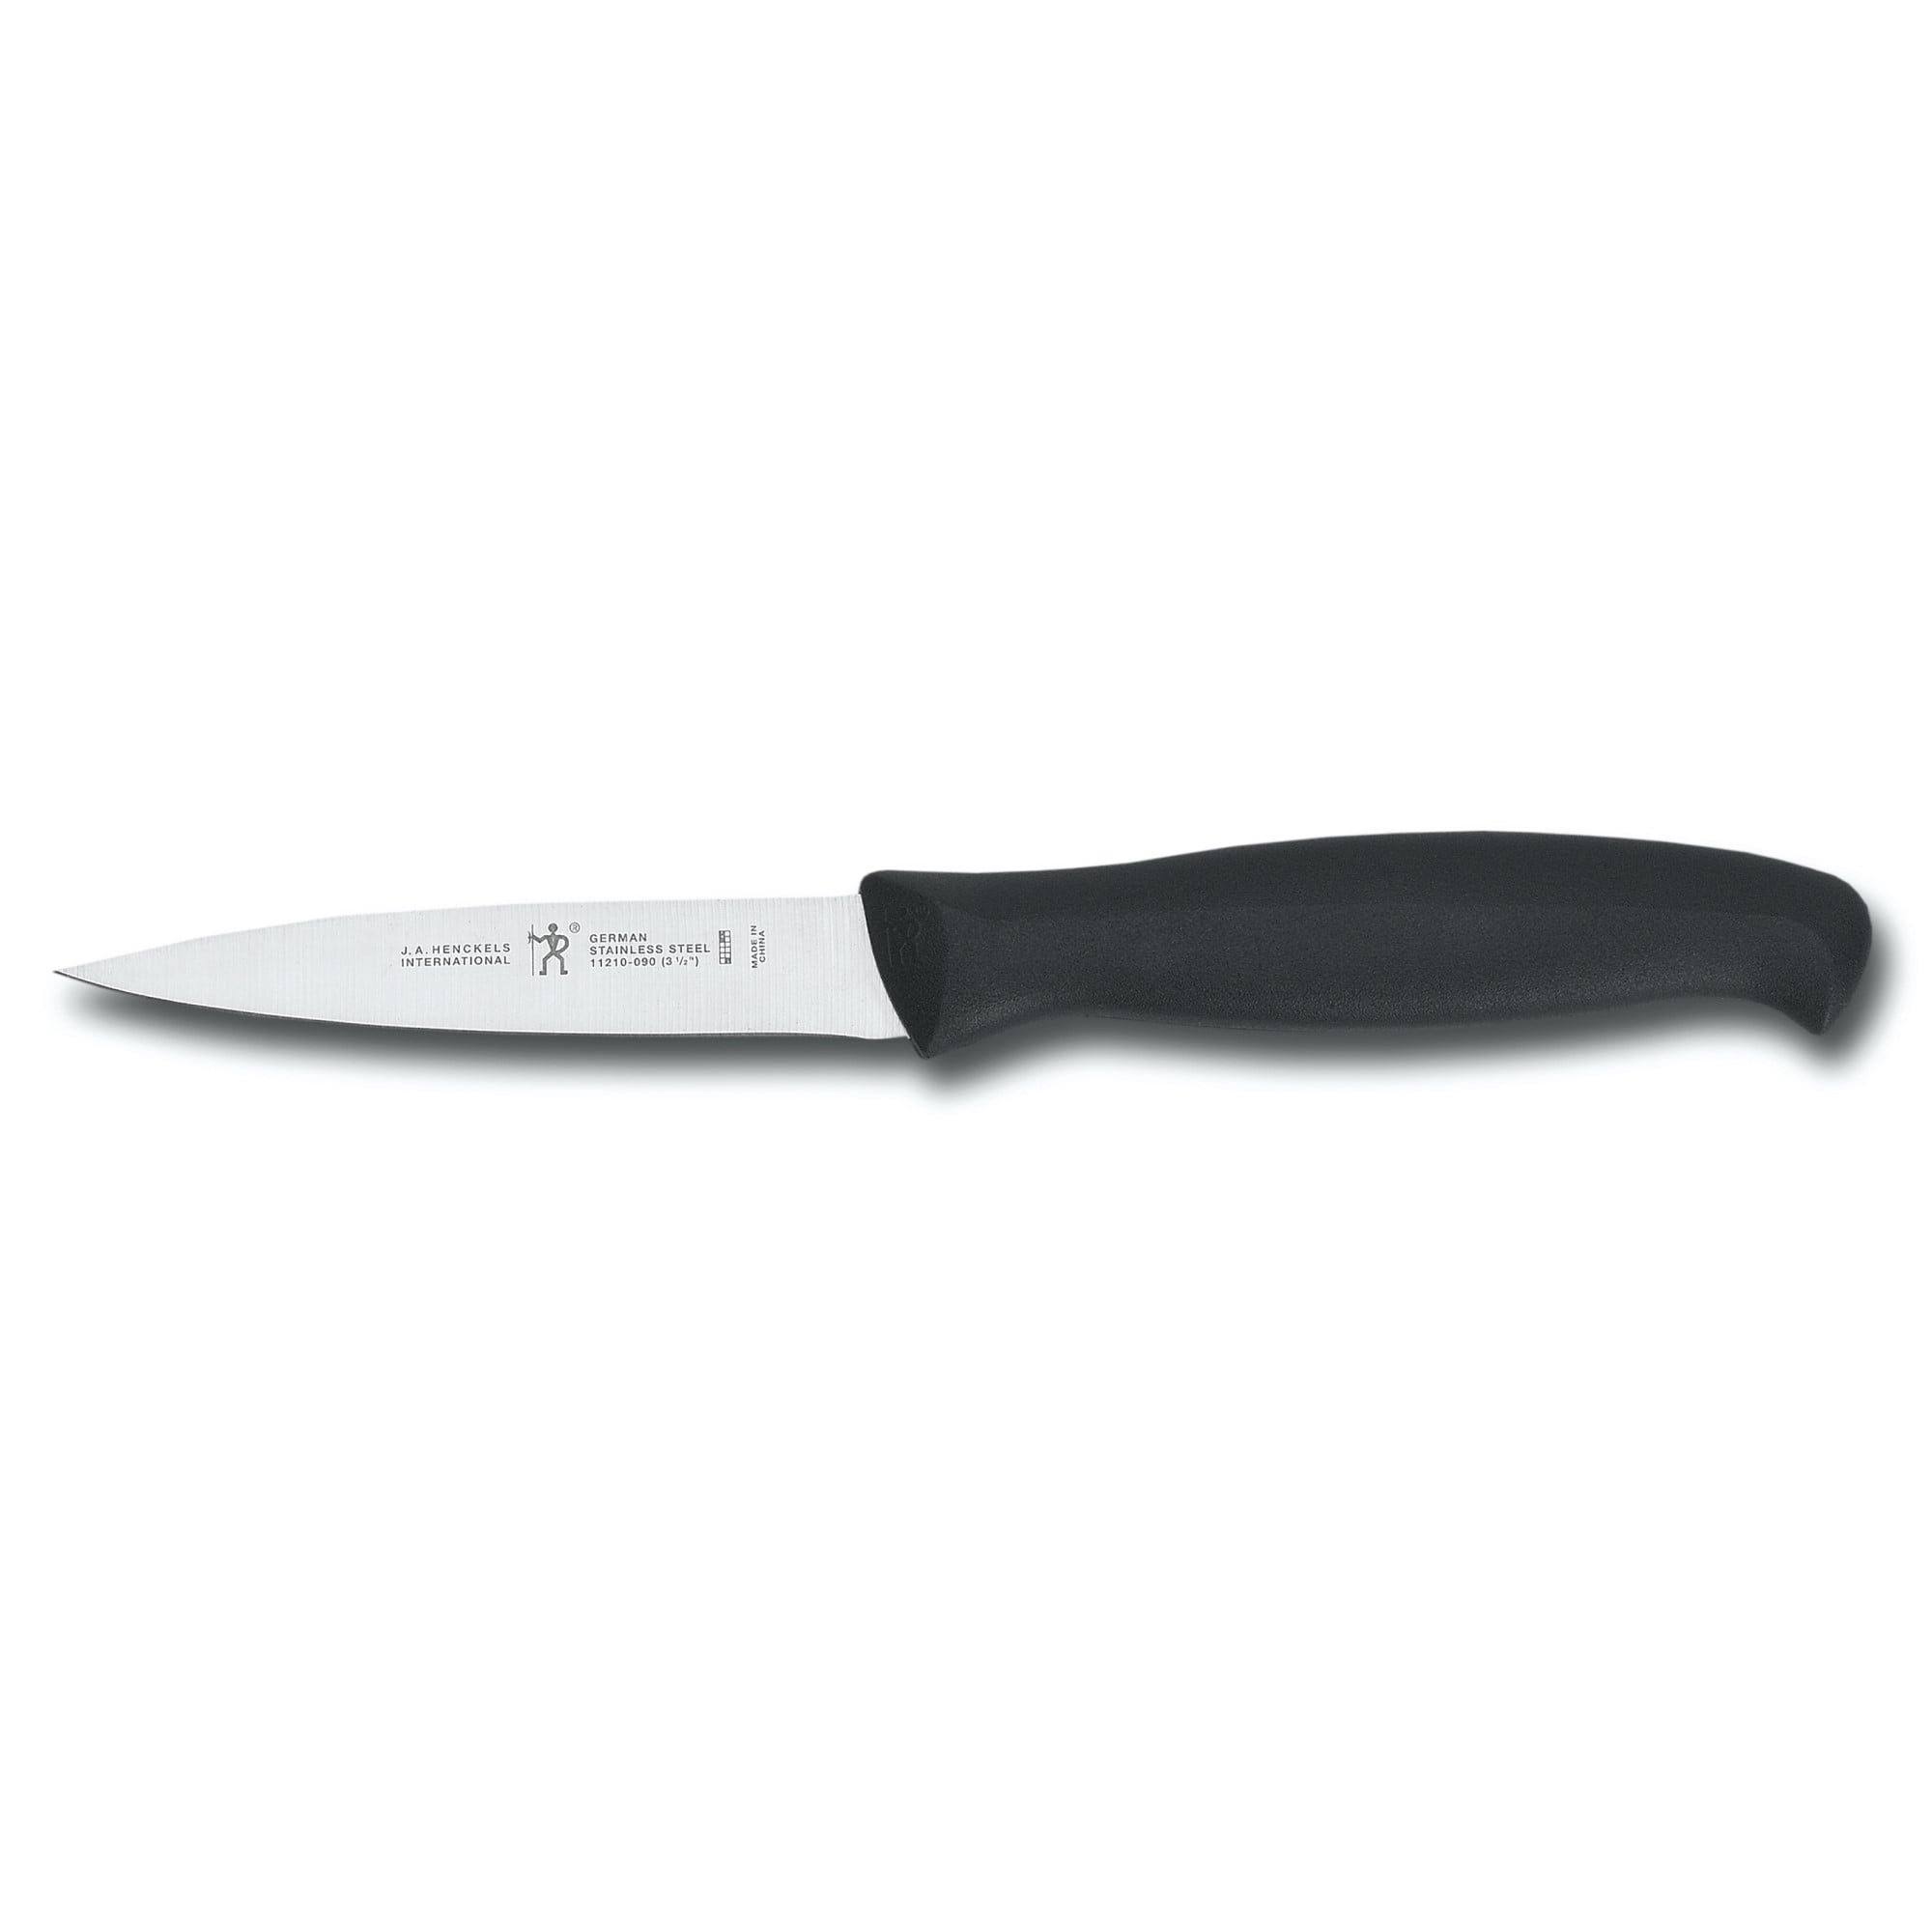 NIB Hessler Paring knife